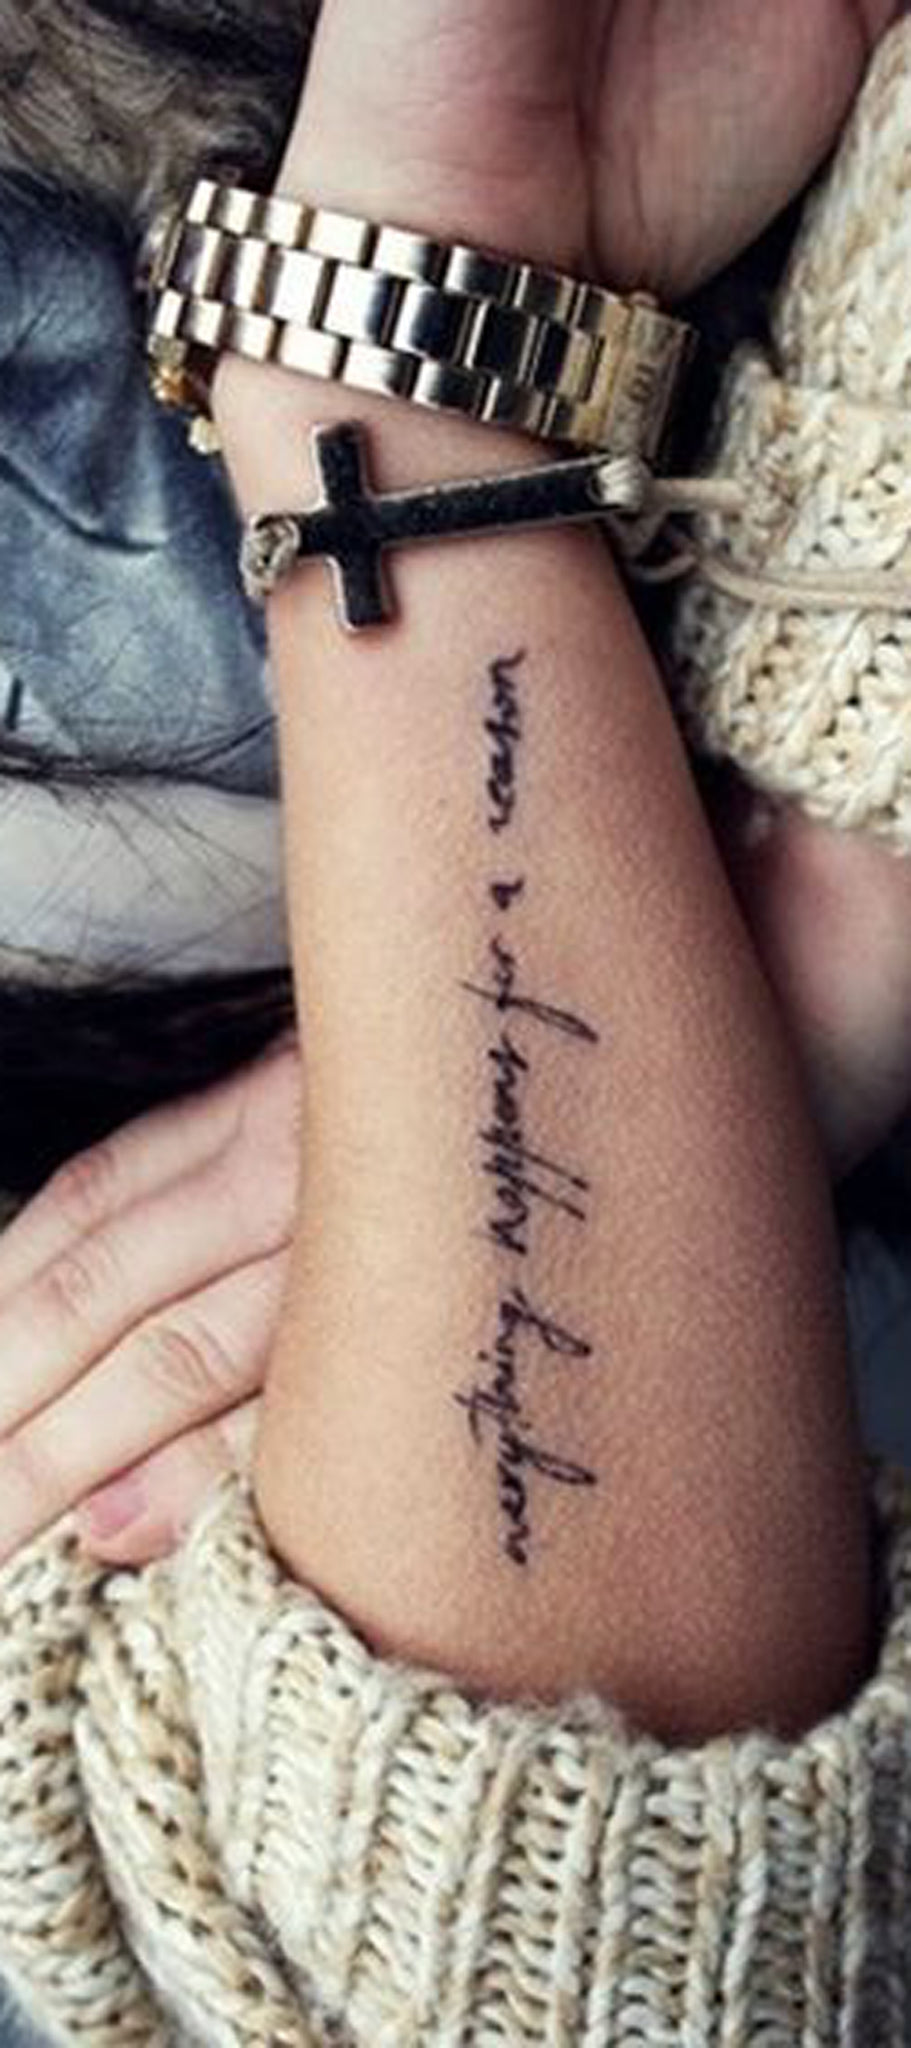 Inspirational Quote Faith Forearm Tattoo Ideas for Women - Cursive Script Arm Tat -  cita ideas tatuaje de antebrazo - www.MyBodiArt.com 